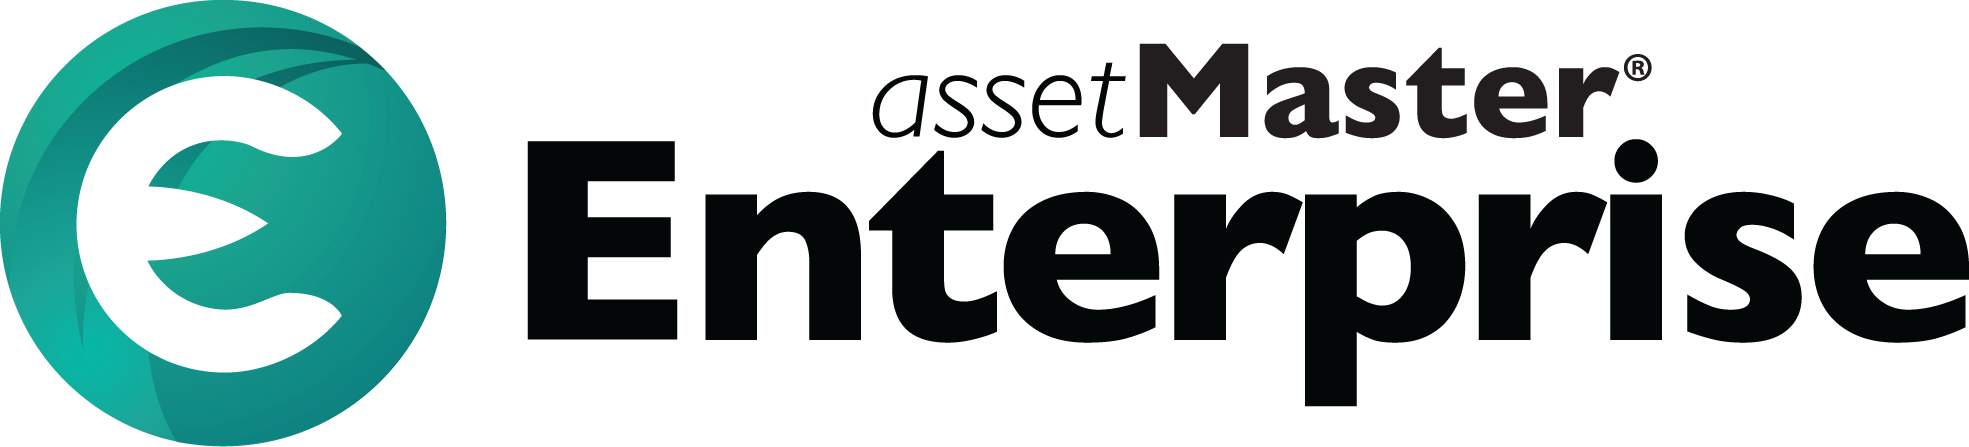 Asset Master Enterprise